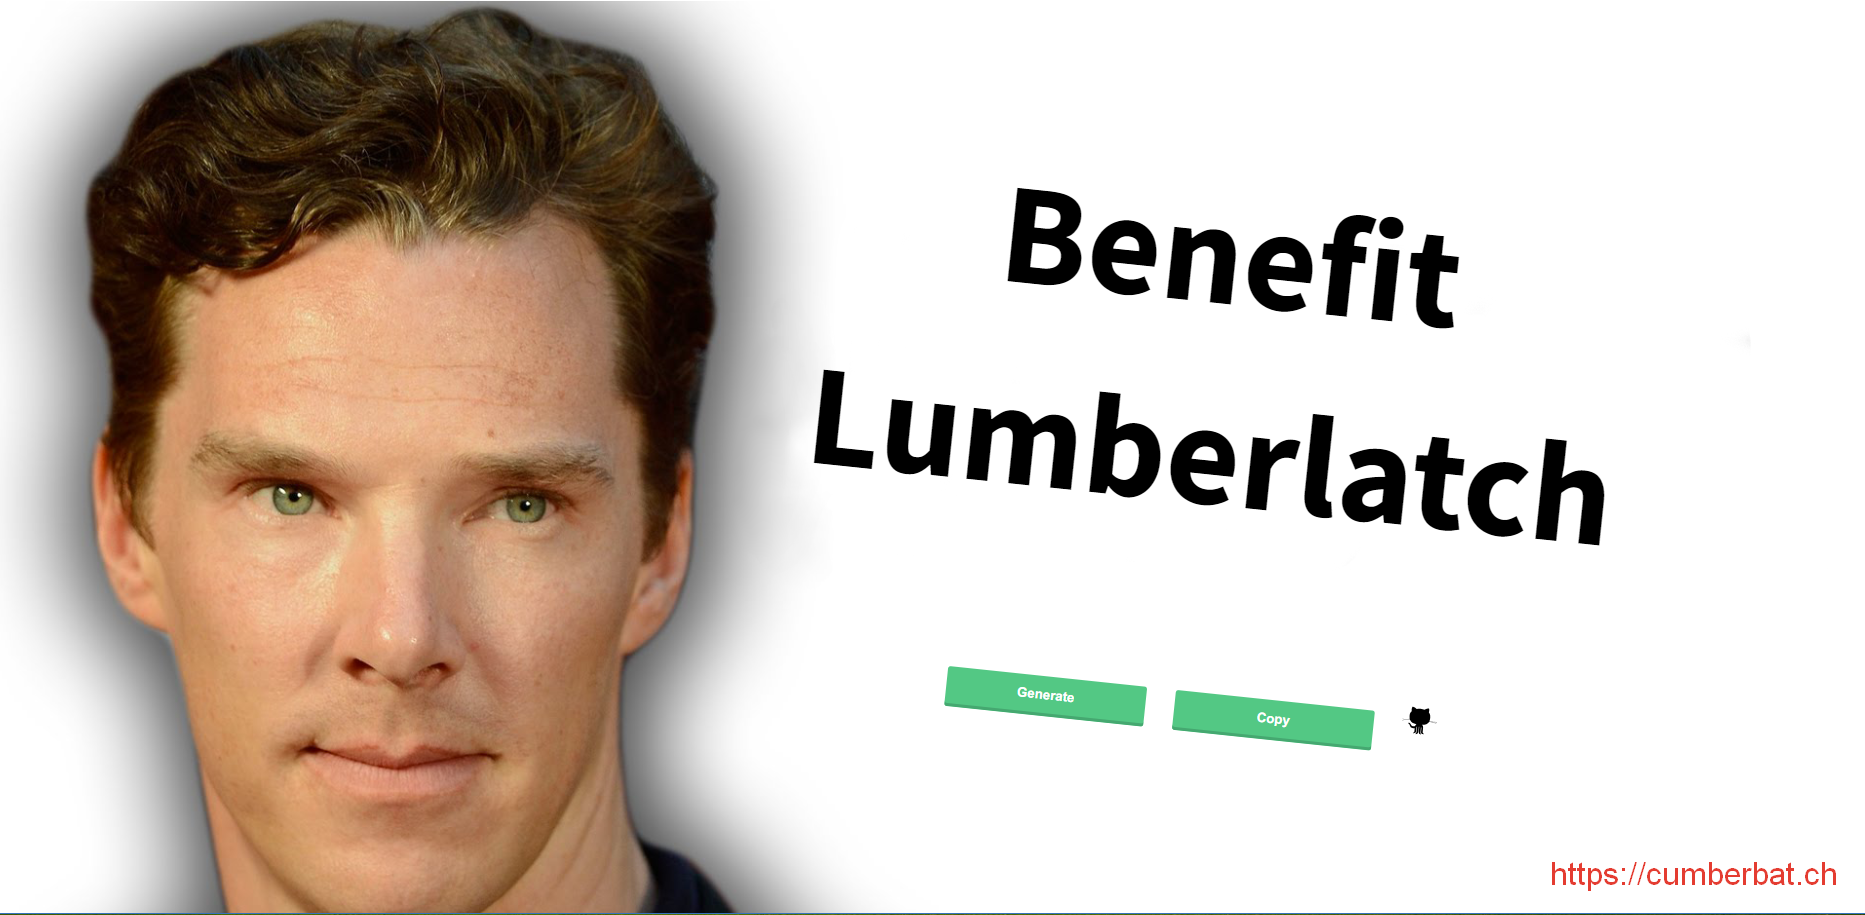 benefit lumberlatch